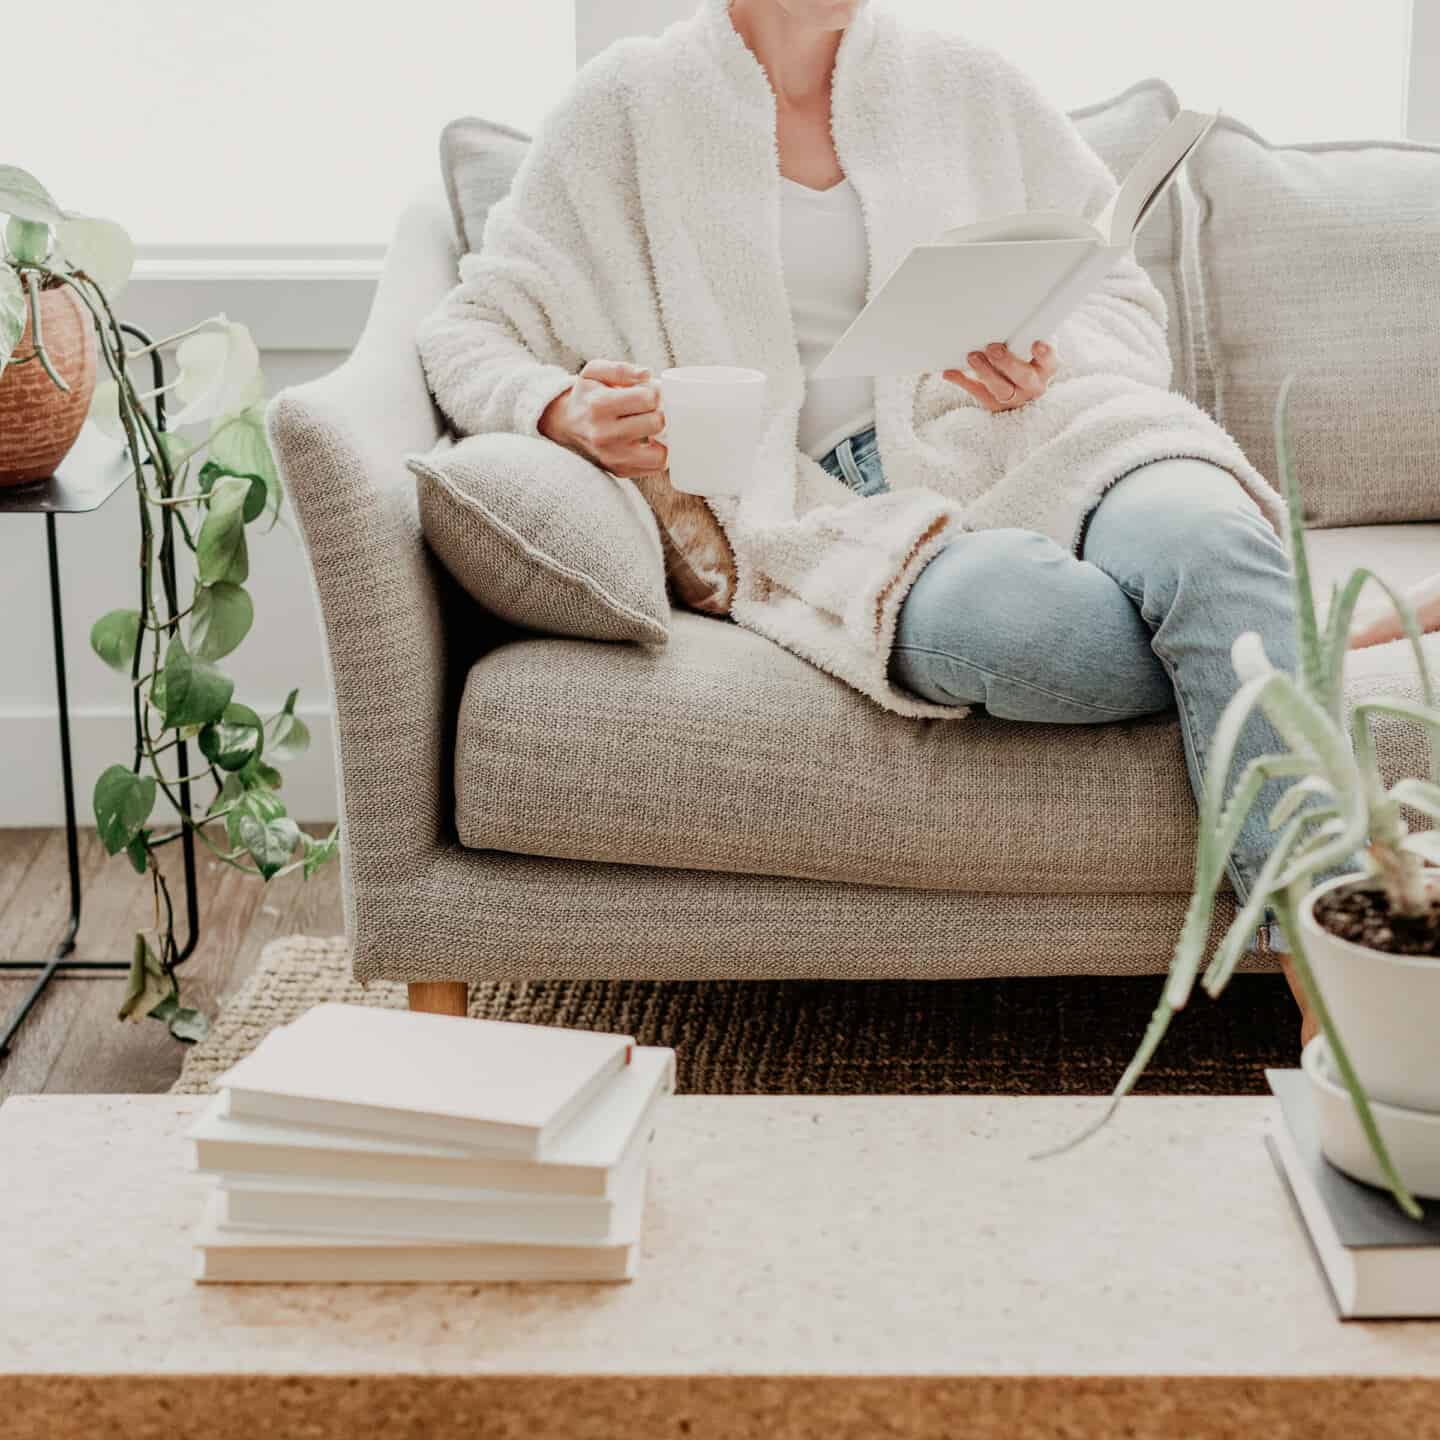 A woman reading books on a sofa